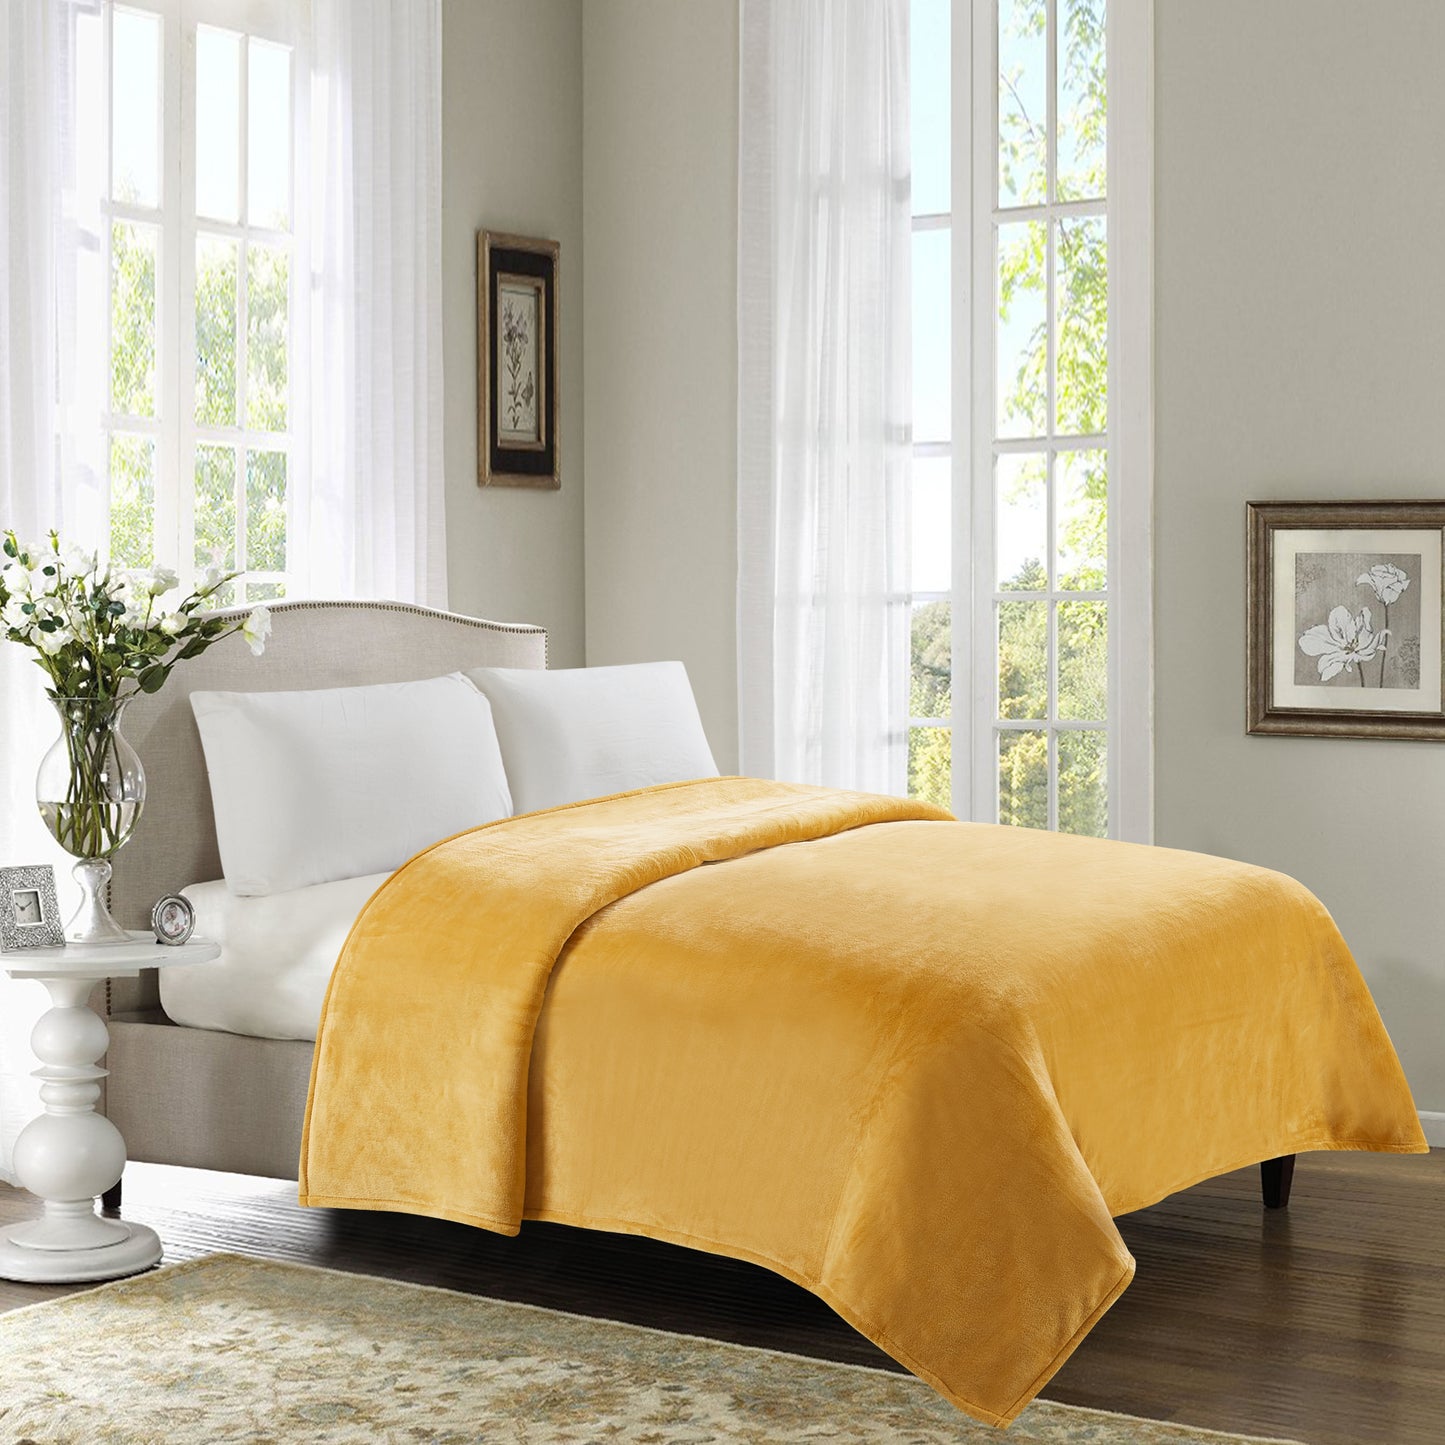 400 Series Solid Plush Blanket - Mustard